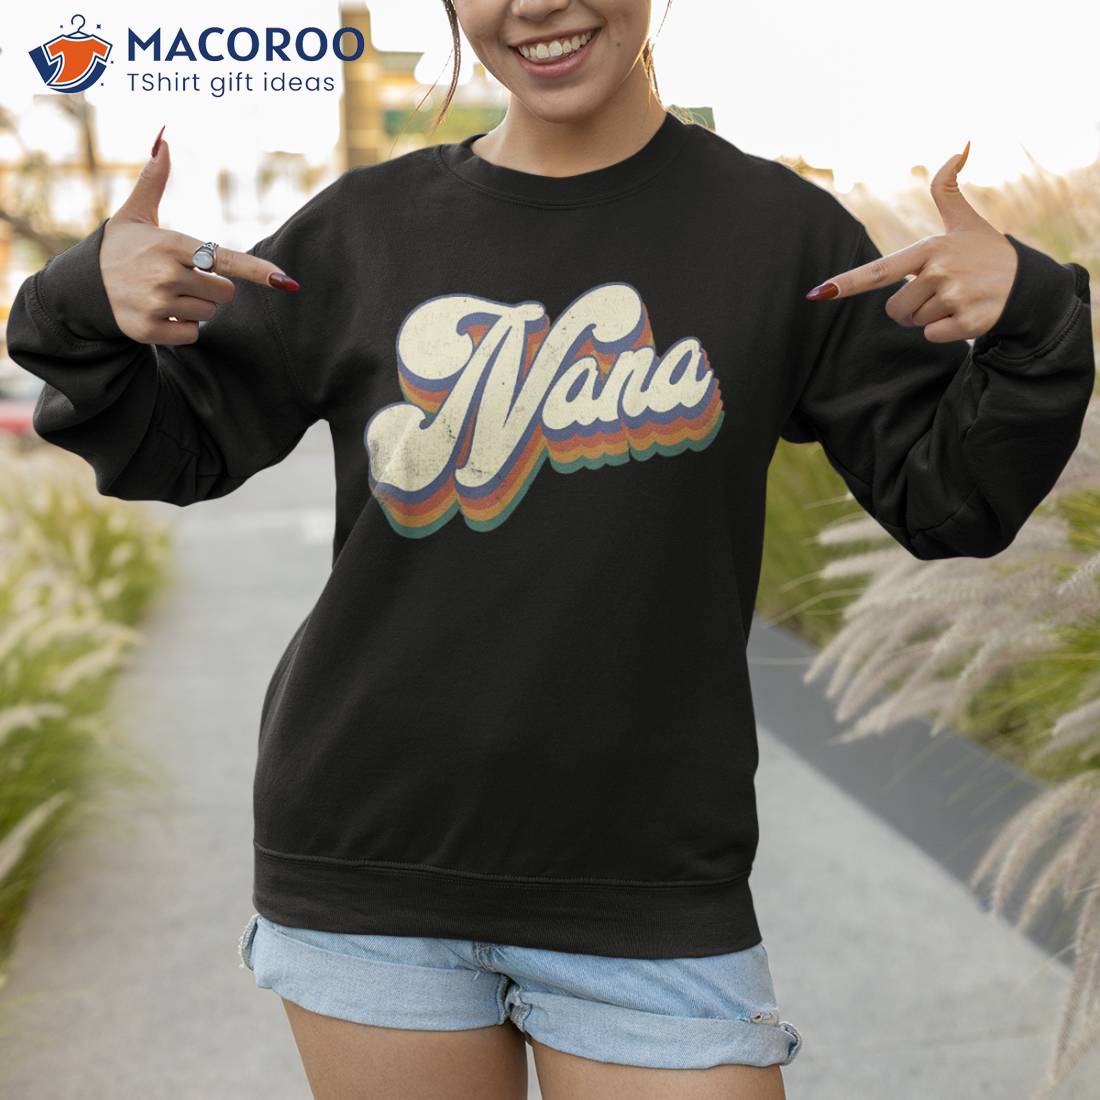 https://images.macoroo.com/wp-content/uploads/2023/04/nana-gifts-for-grandma-retro-vintage-mother-s-day-shirt-sweatshirt.jpg